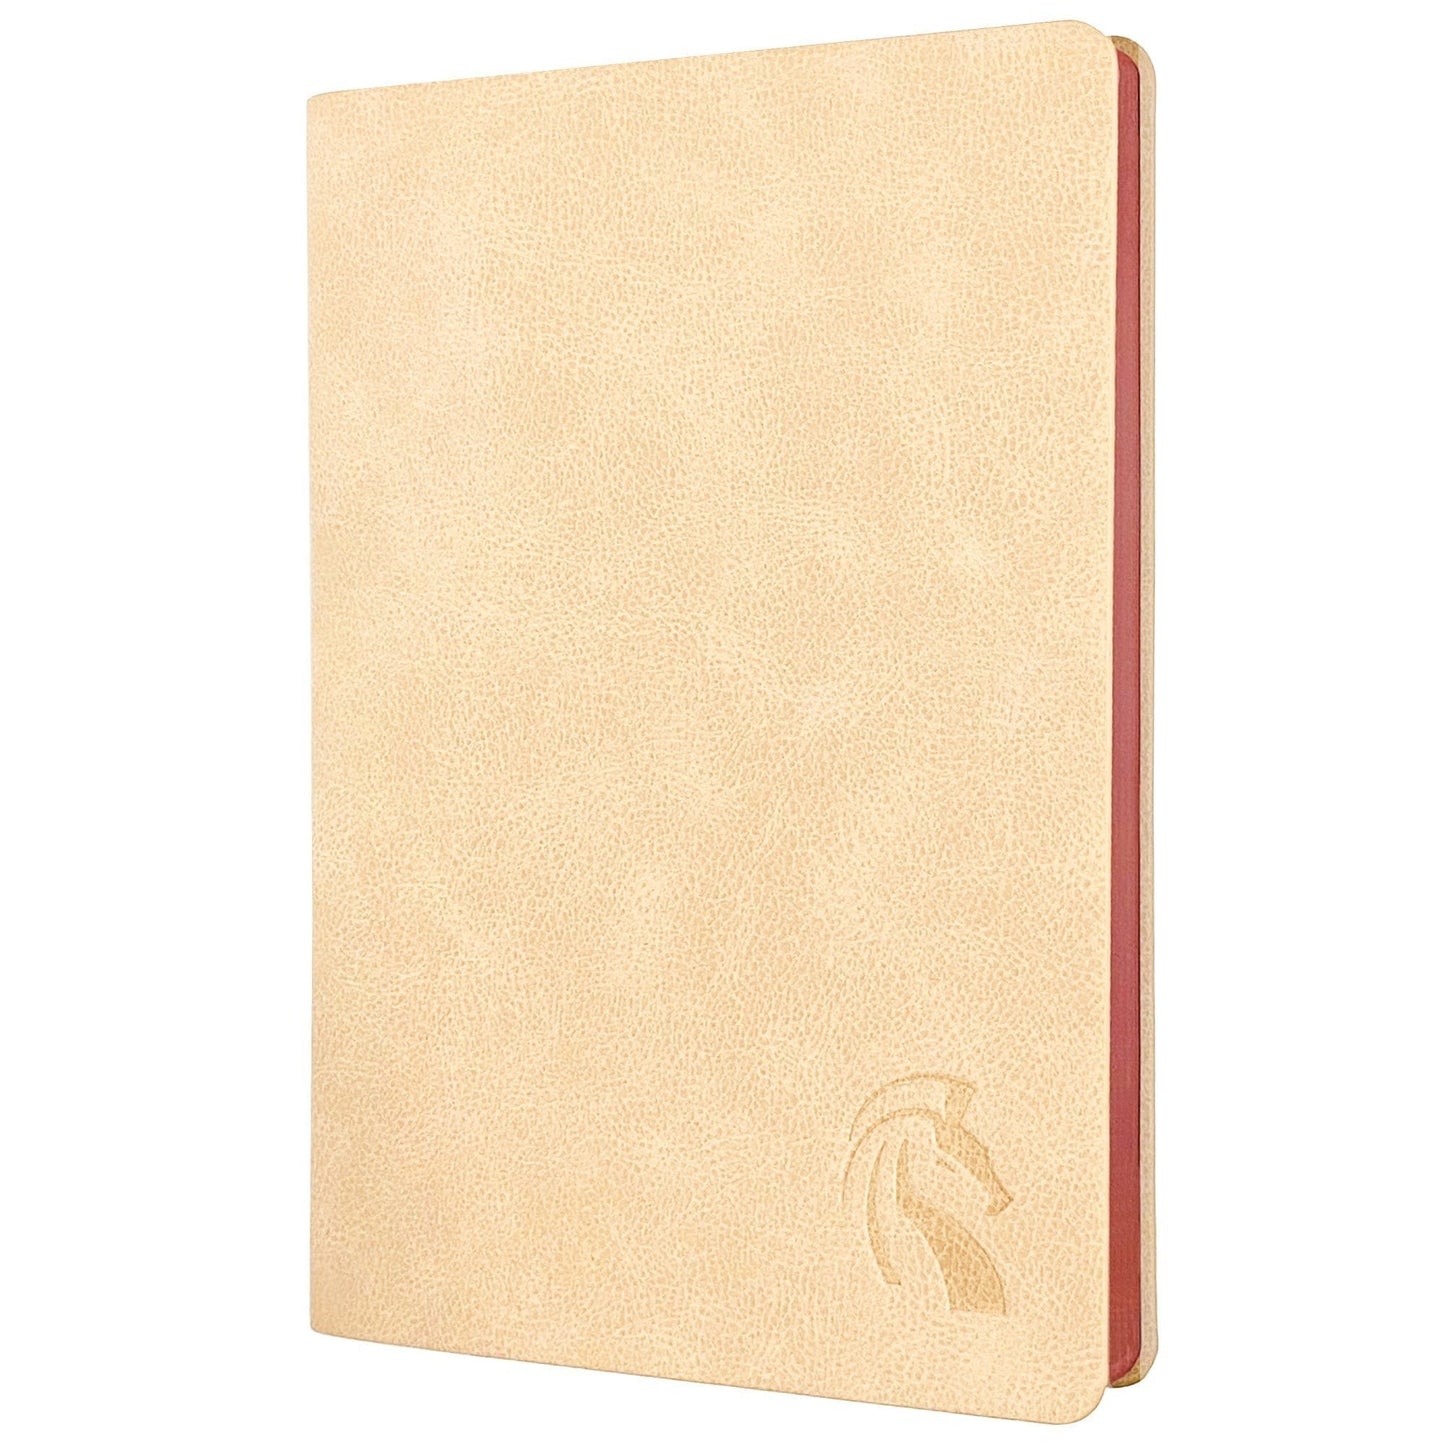 LeStallion Journal For Men | 120GSM PU Leather Notebook